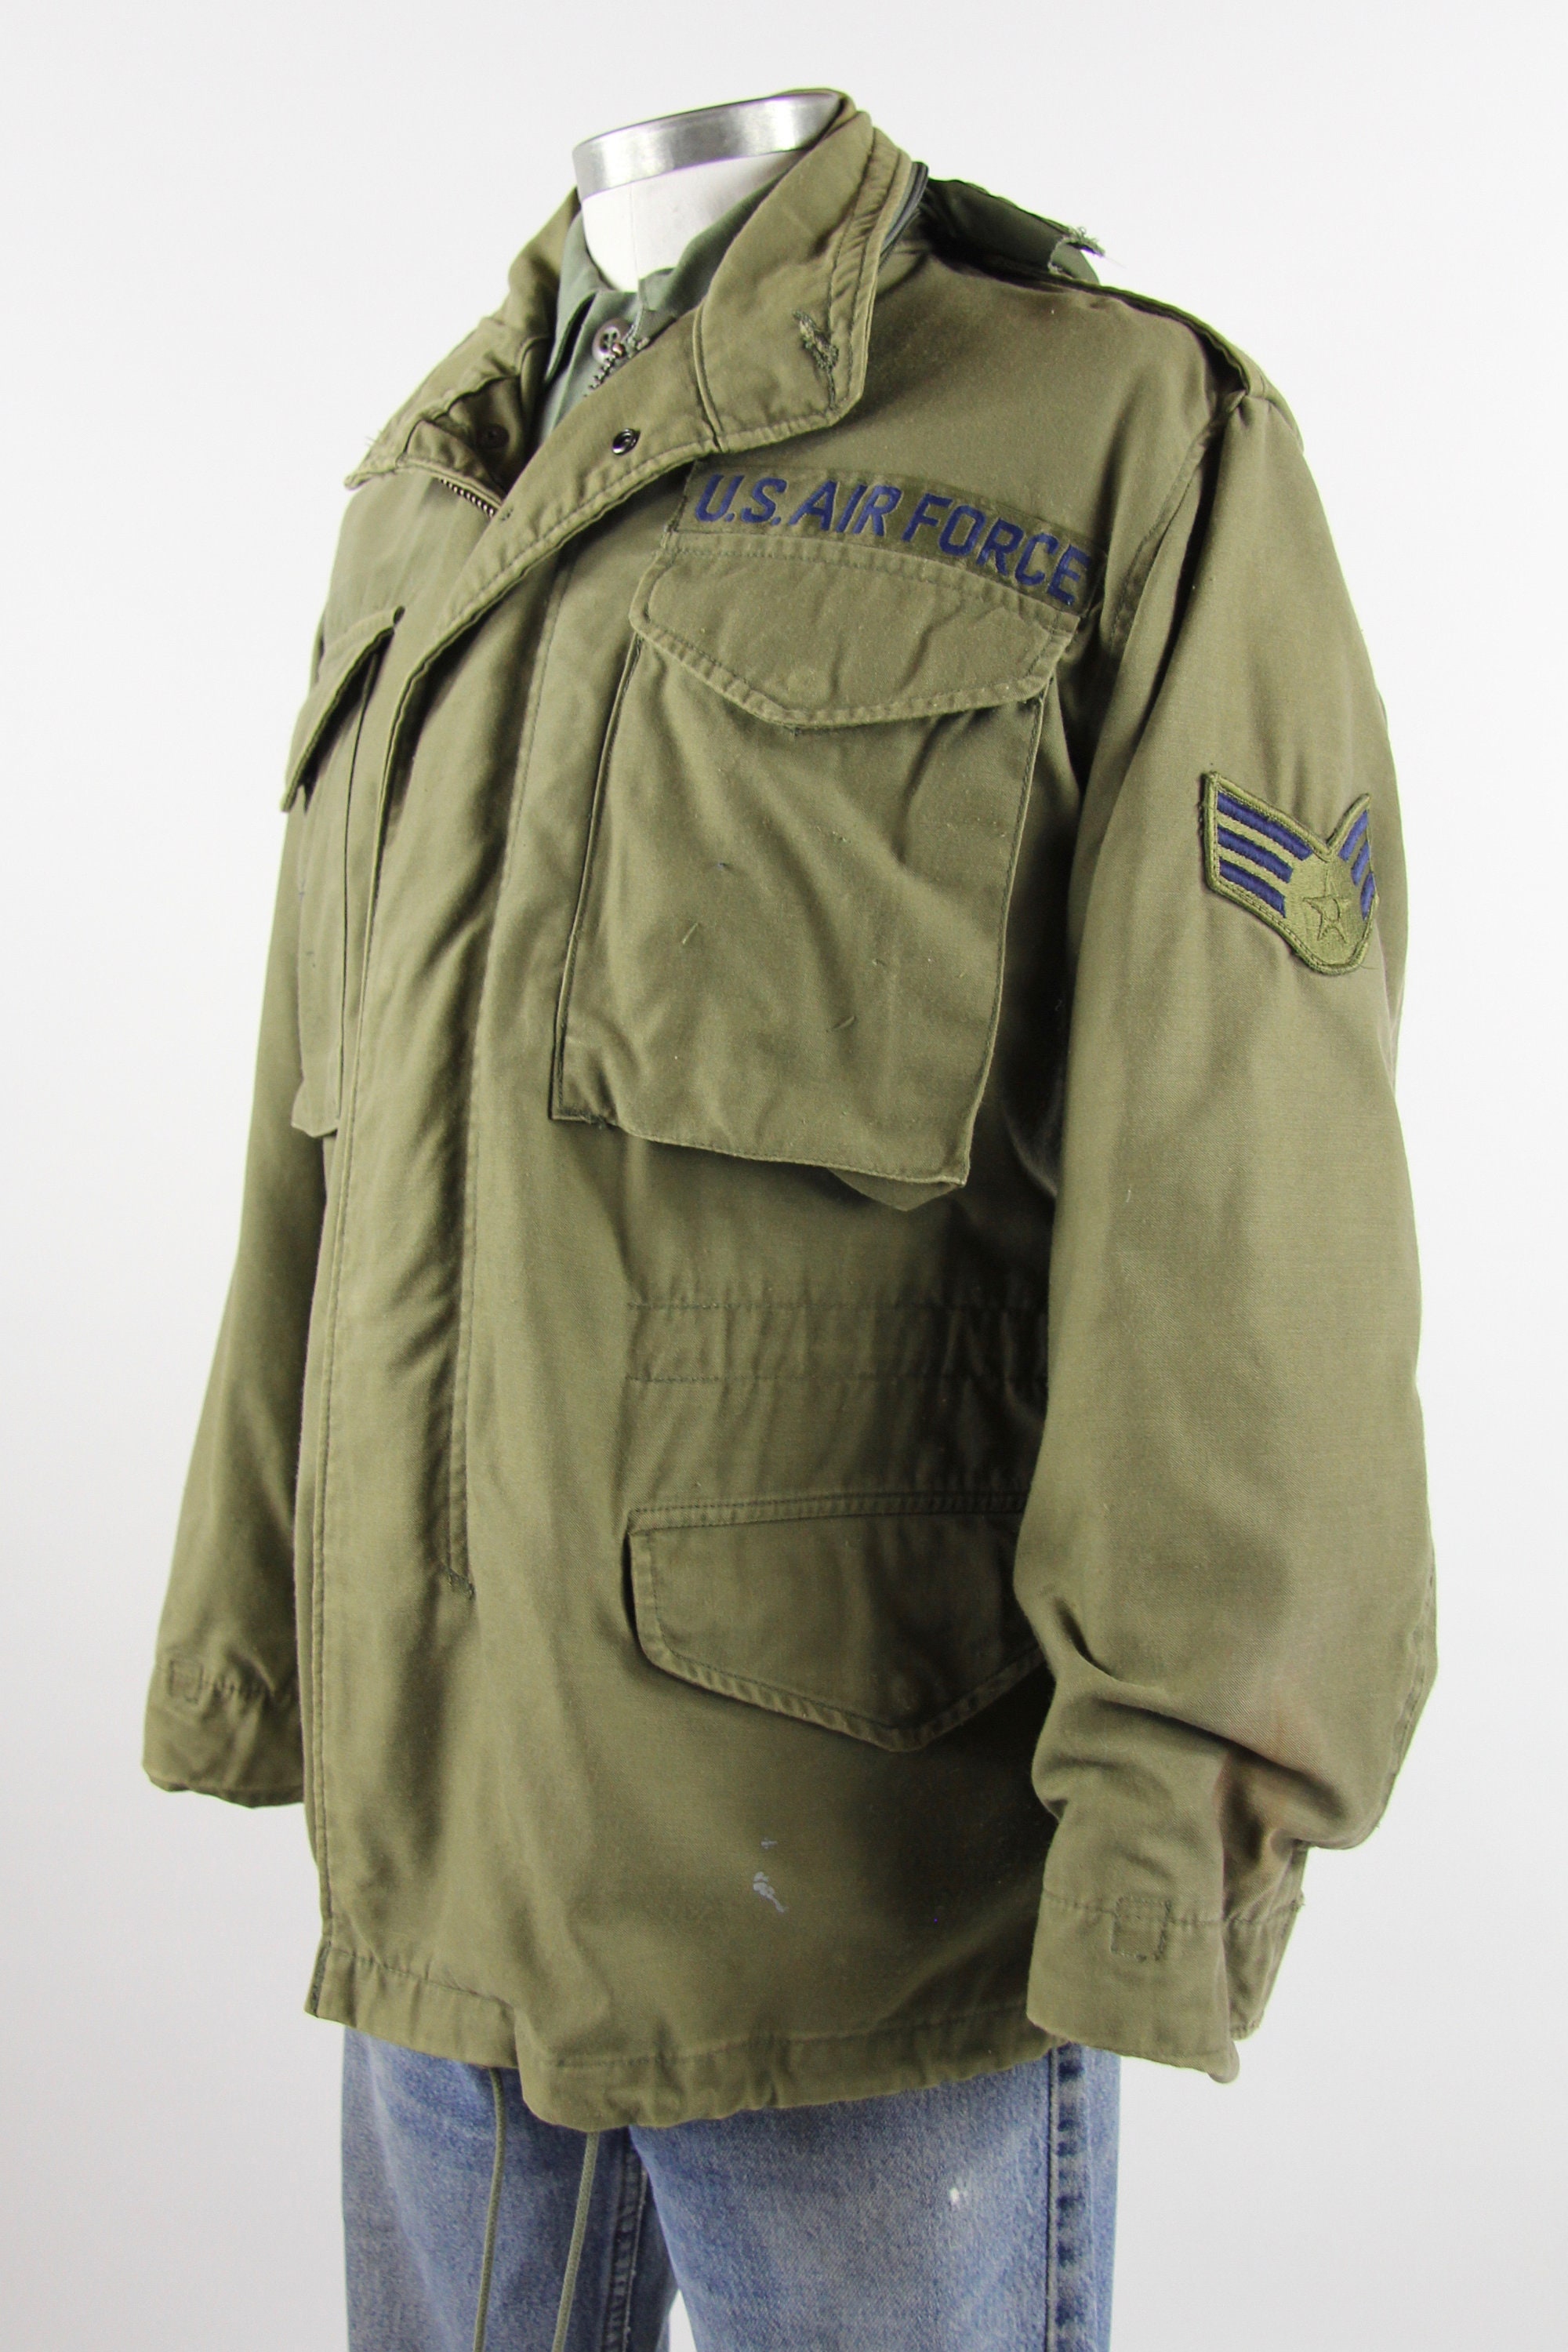 OG-107 Military Coat Men's Olive Green Military Vietnam 70s Jacket Size ...